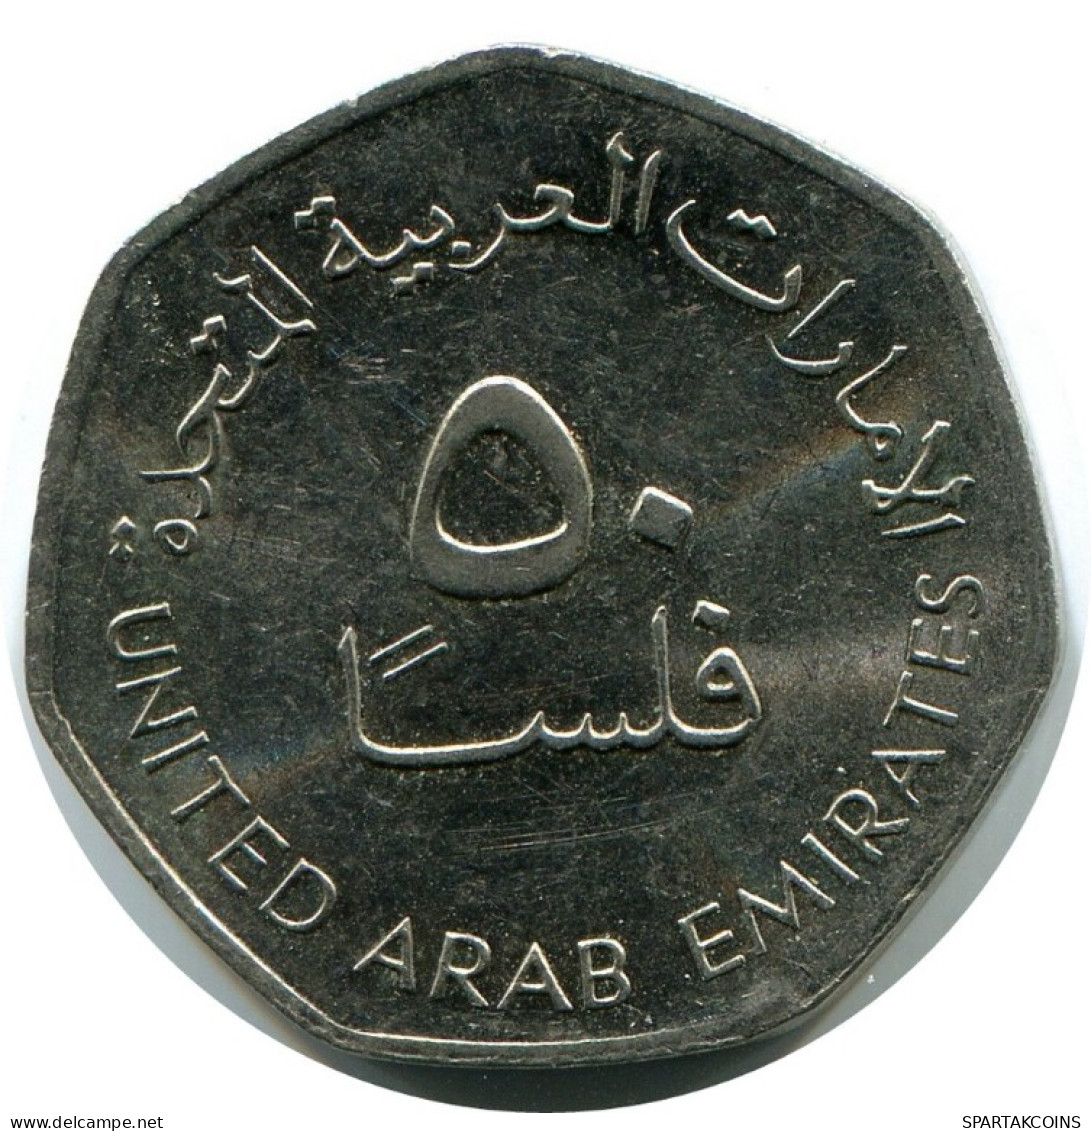 50 FILS 2007 UAE UNITED ARAB EMIRATES Islamic Coin #AK195.U.A - United Arab Emirates